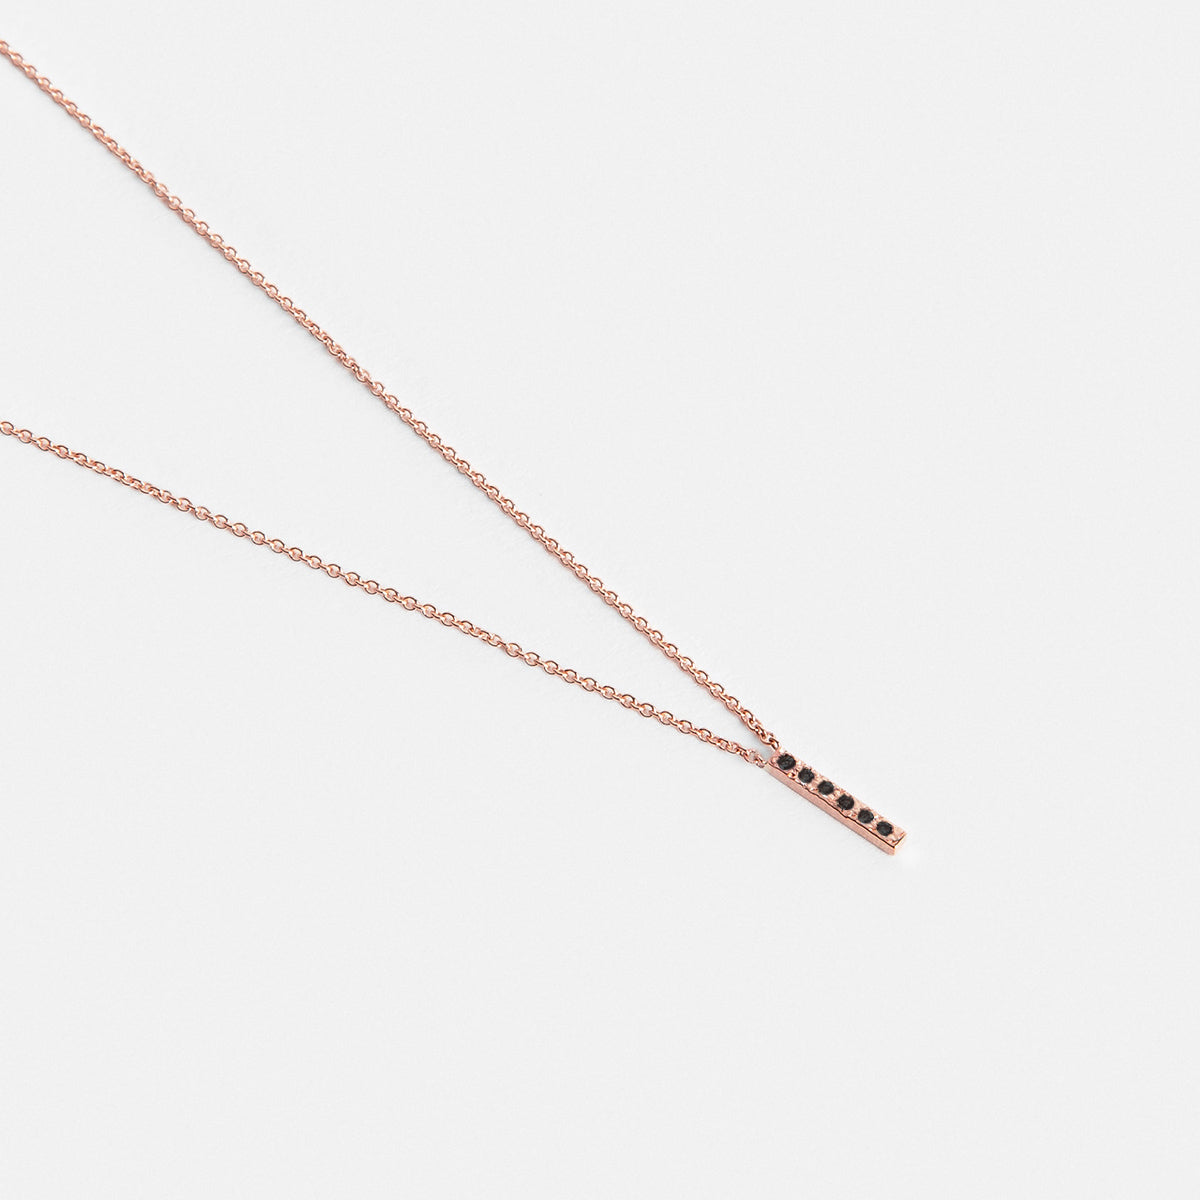 Mini Tiru Thin Necklace in 14k Rose Gold set with Blackl Diamonds By SHW Fine Jewelry NYC